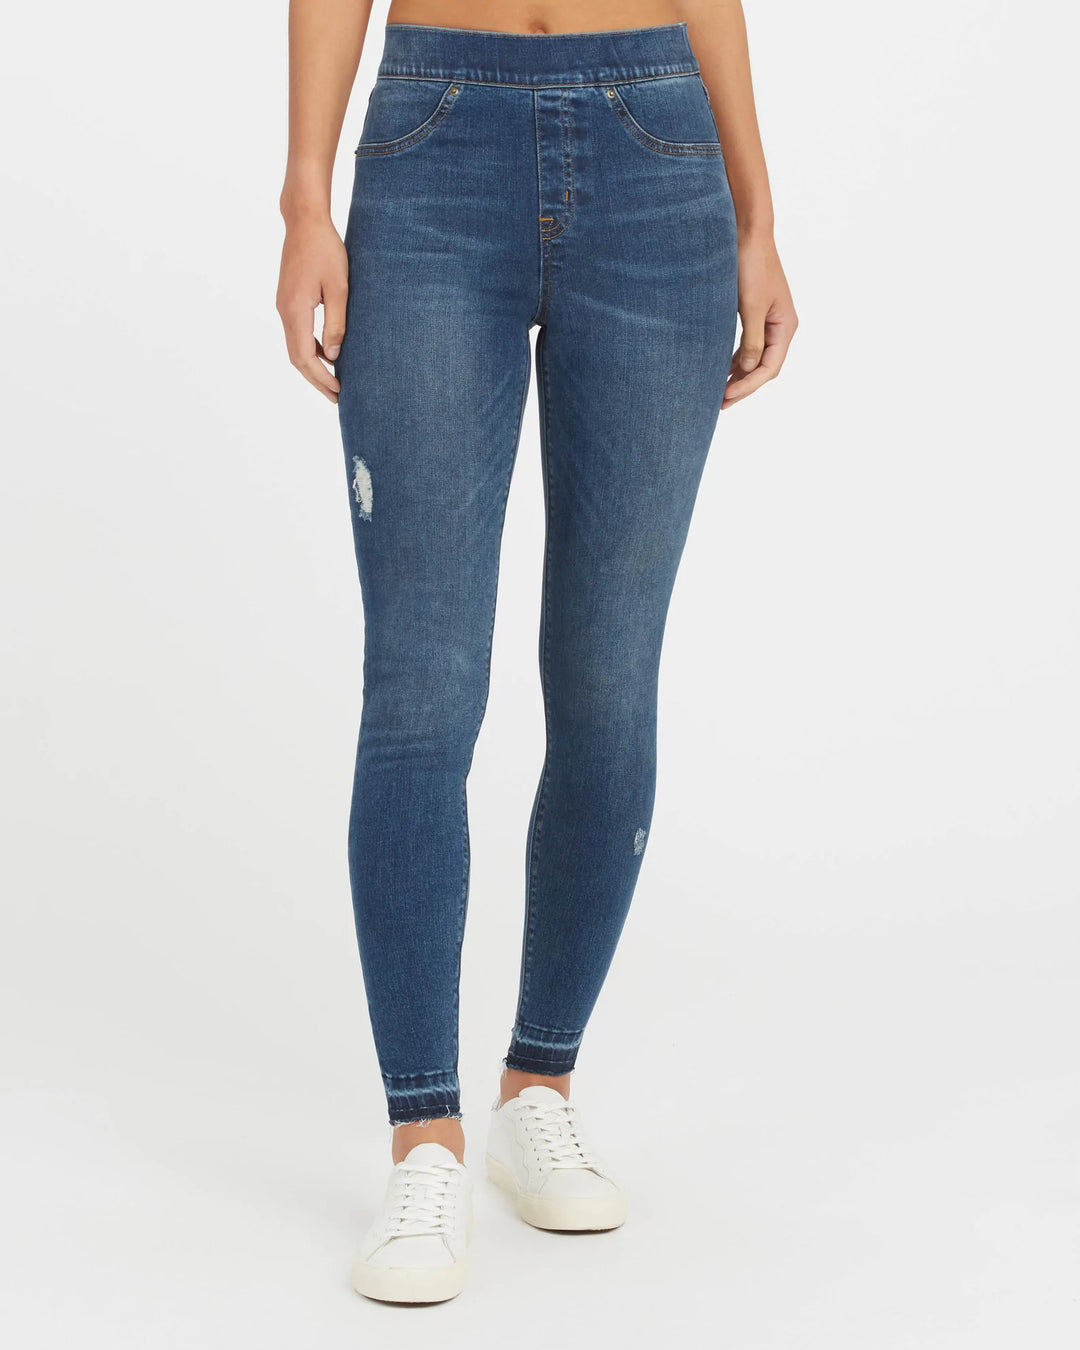 SPANX, Jeans, Spanx Distressed Denim Leggings Size Medium New